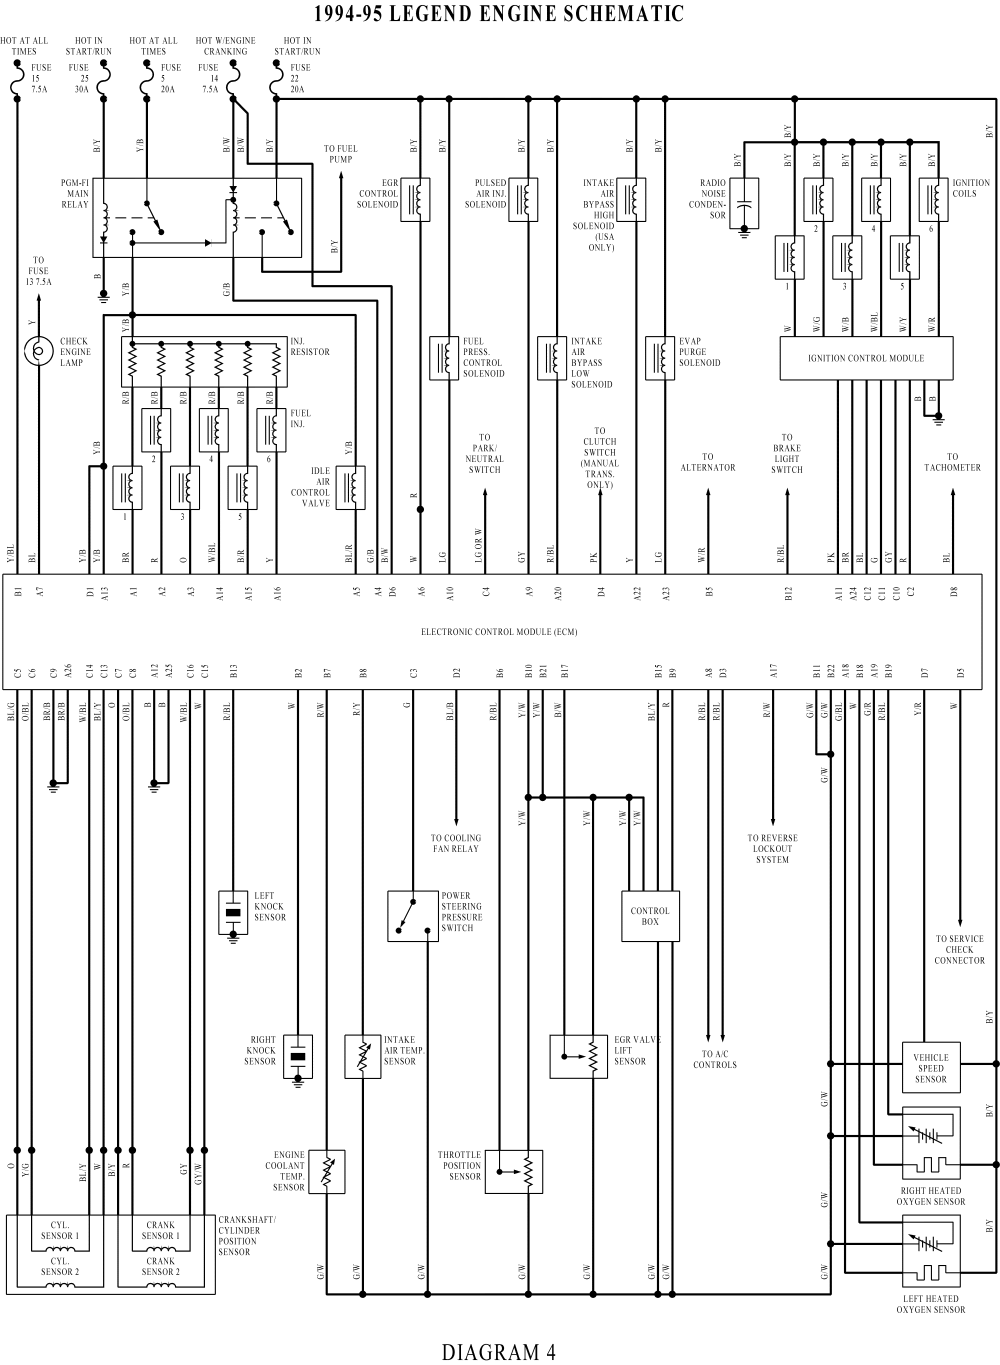 wiringdiagrams: Engine Schematic wiring diagram for 1994-95 Acura Legend?